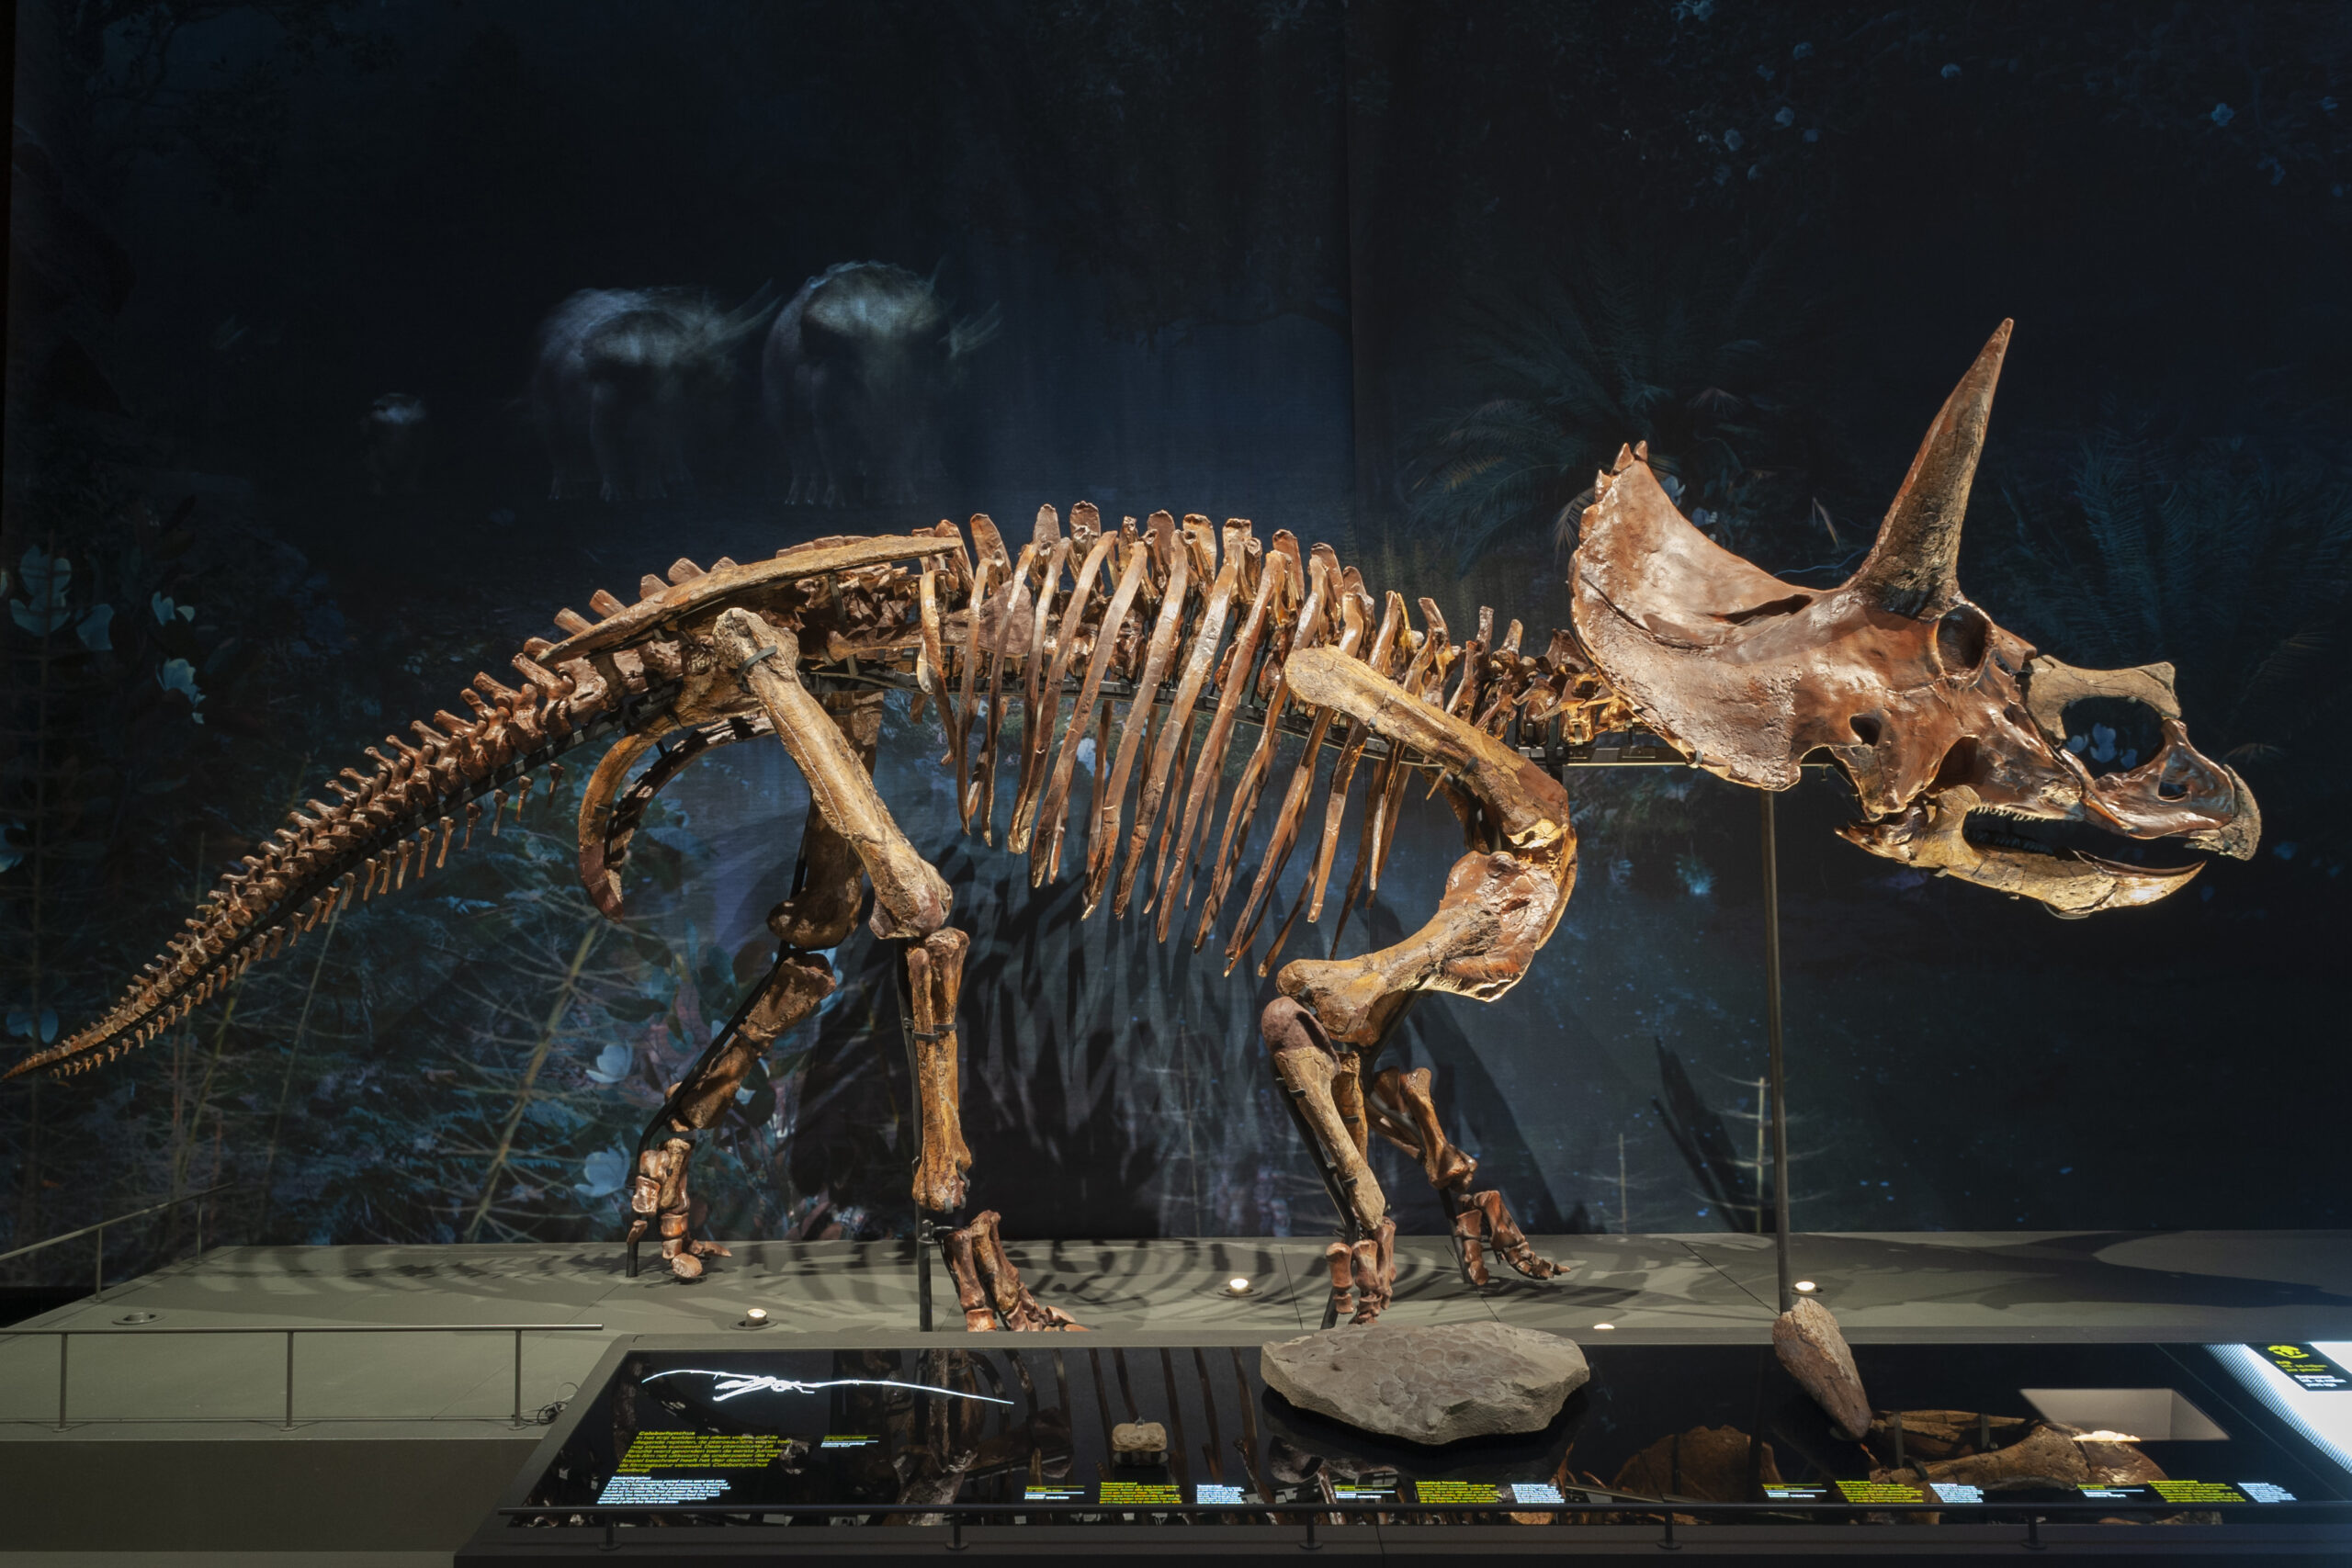 Triceratops Dinosaur Skeleton